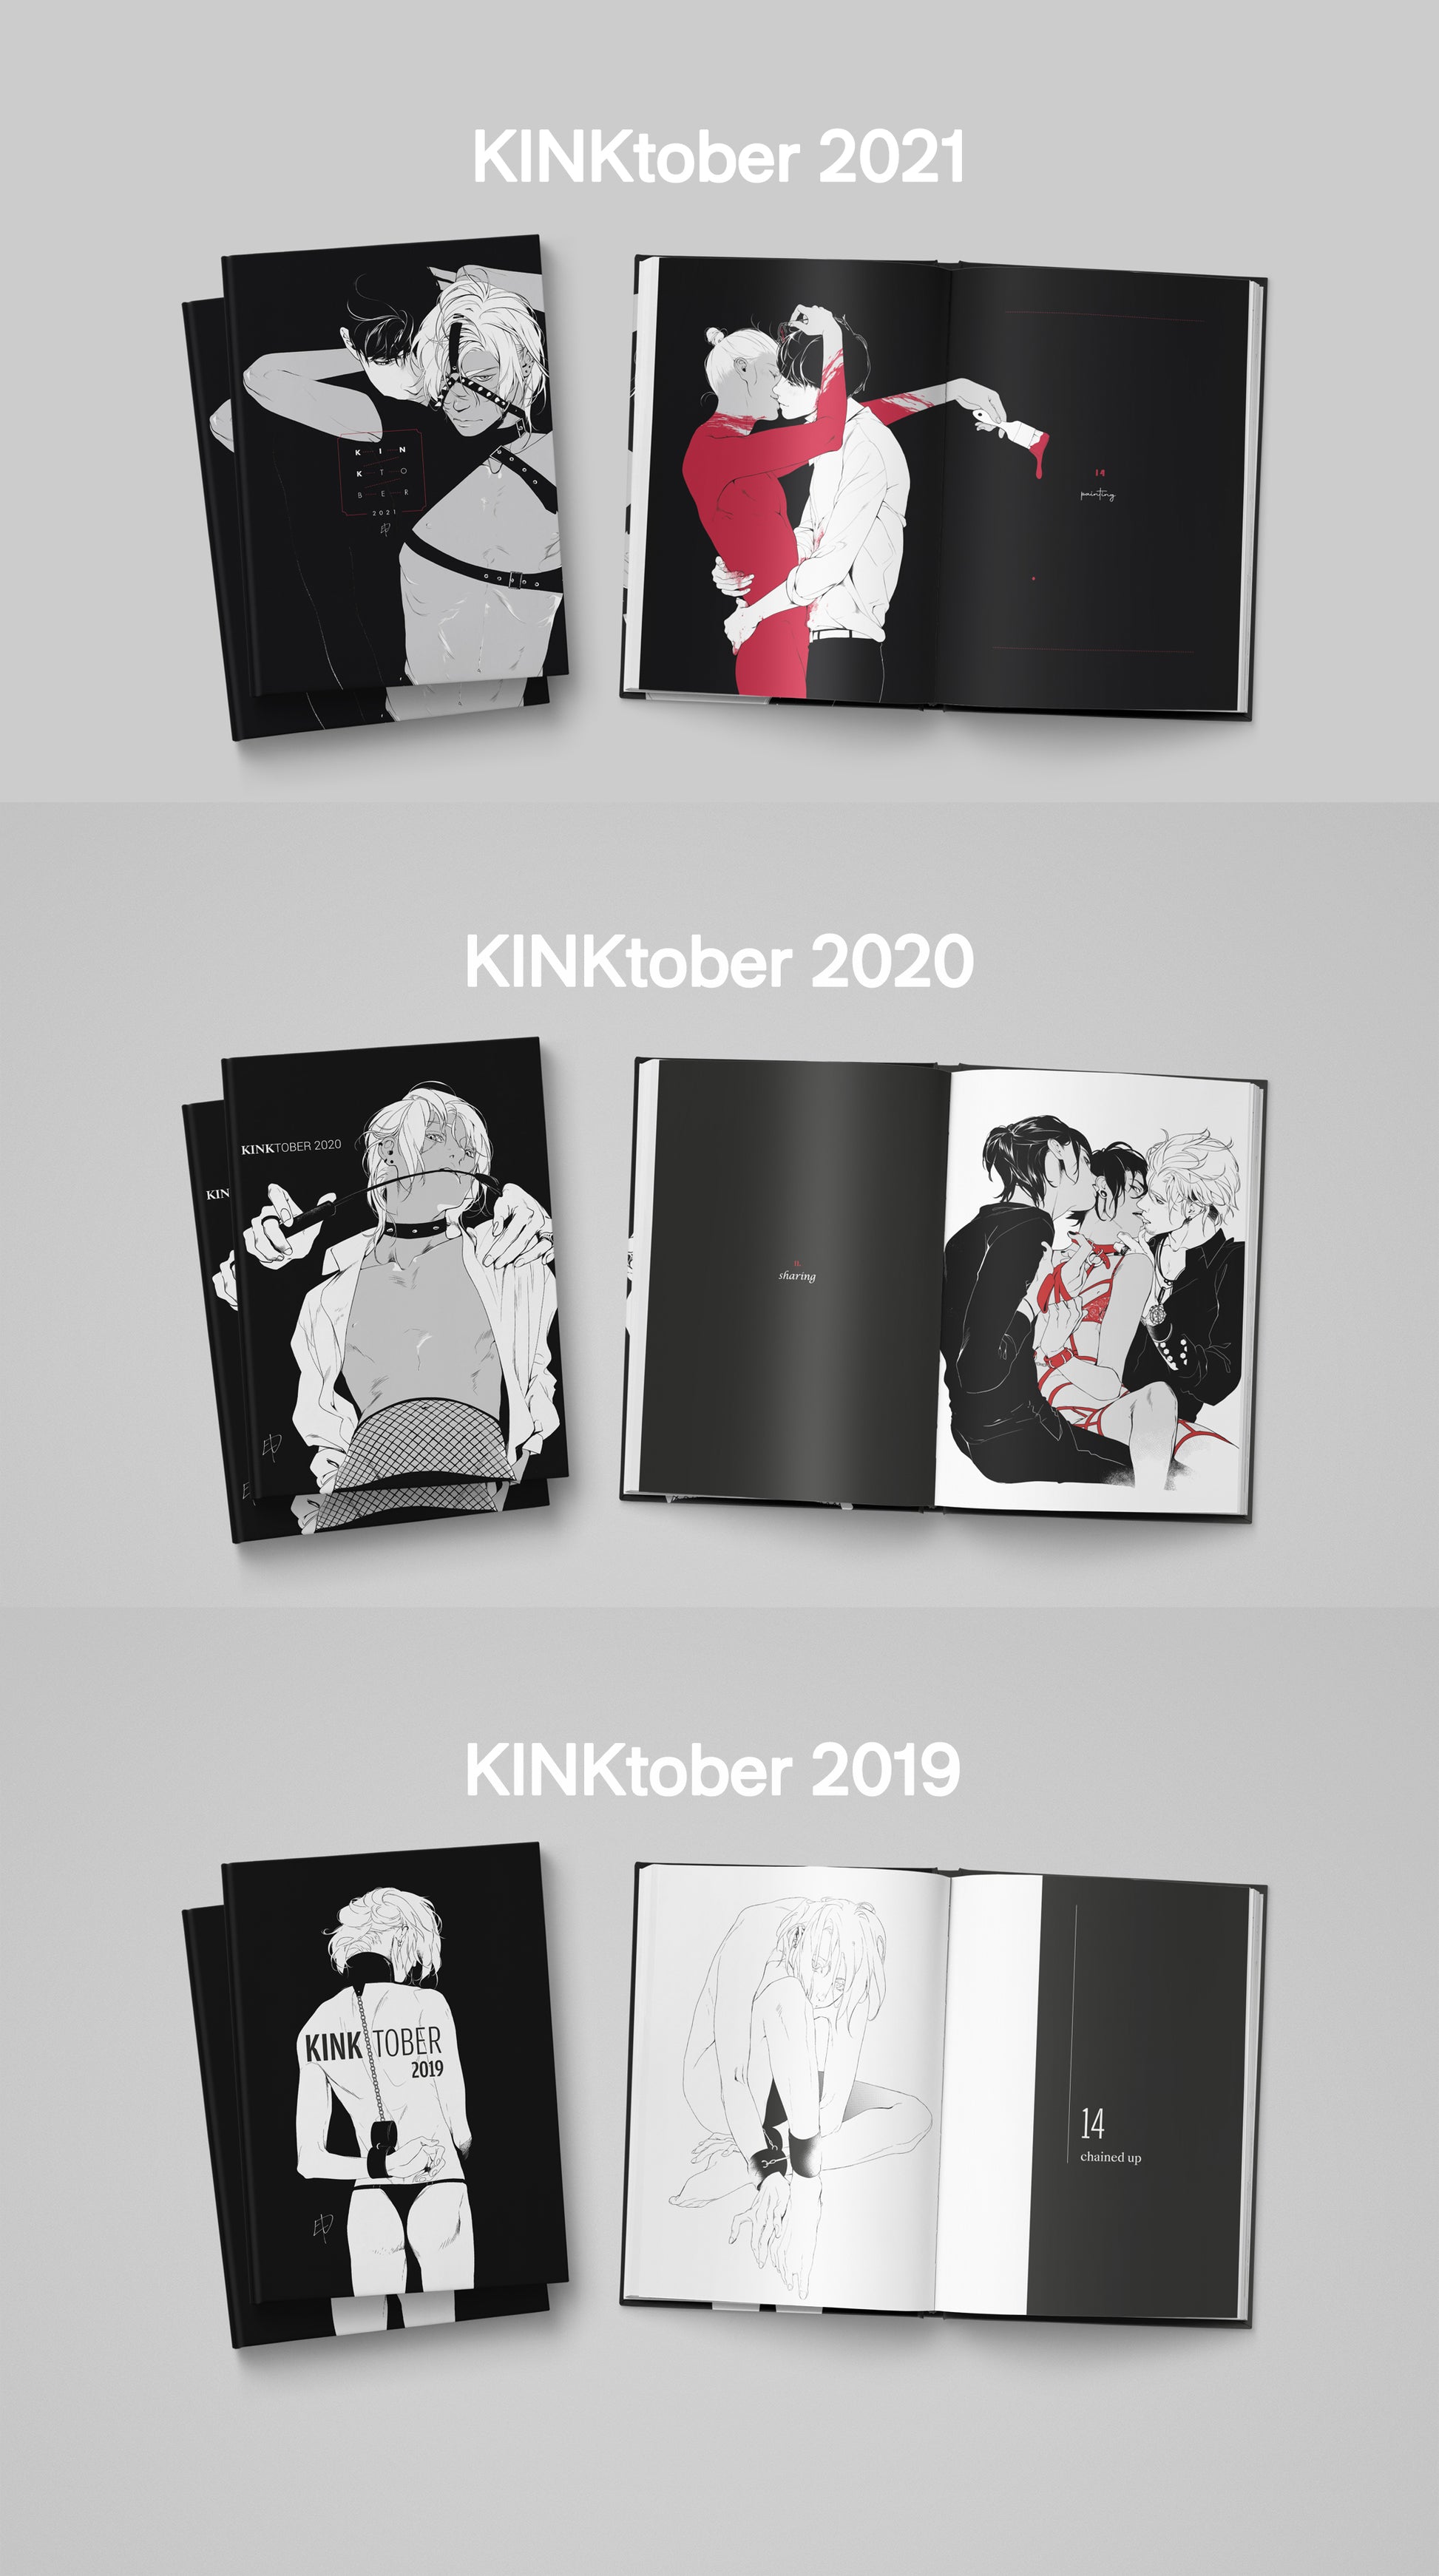 ARTBOOK COLLECTION KINKtober 2019 - 2021 [NSFW] - 3 books - EDIllustration